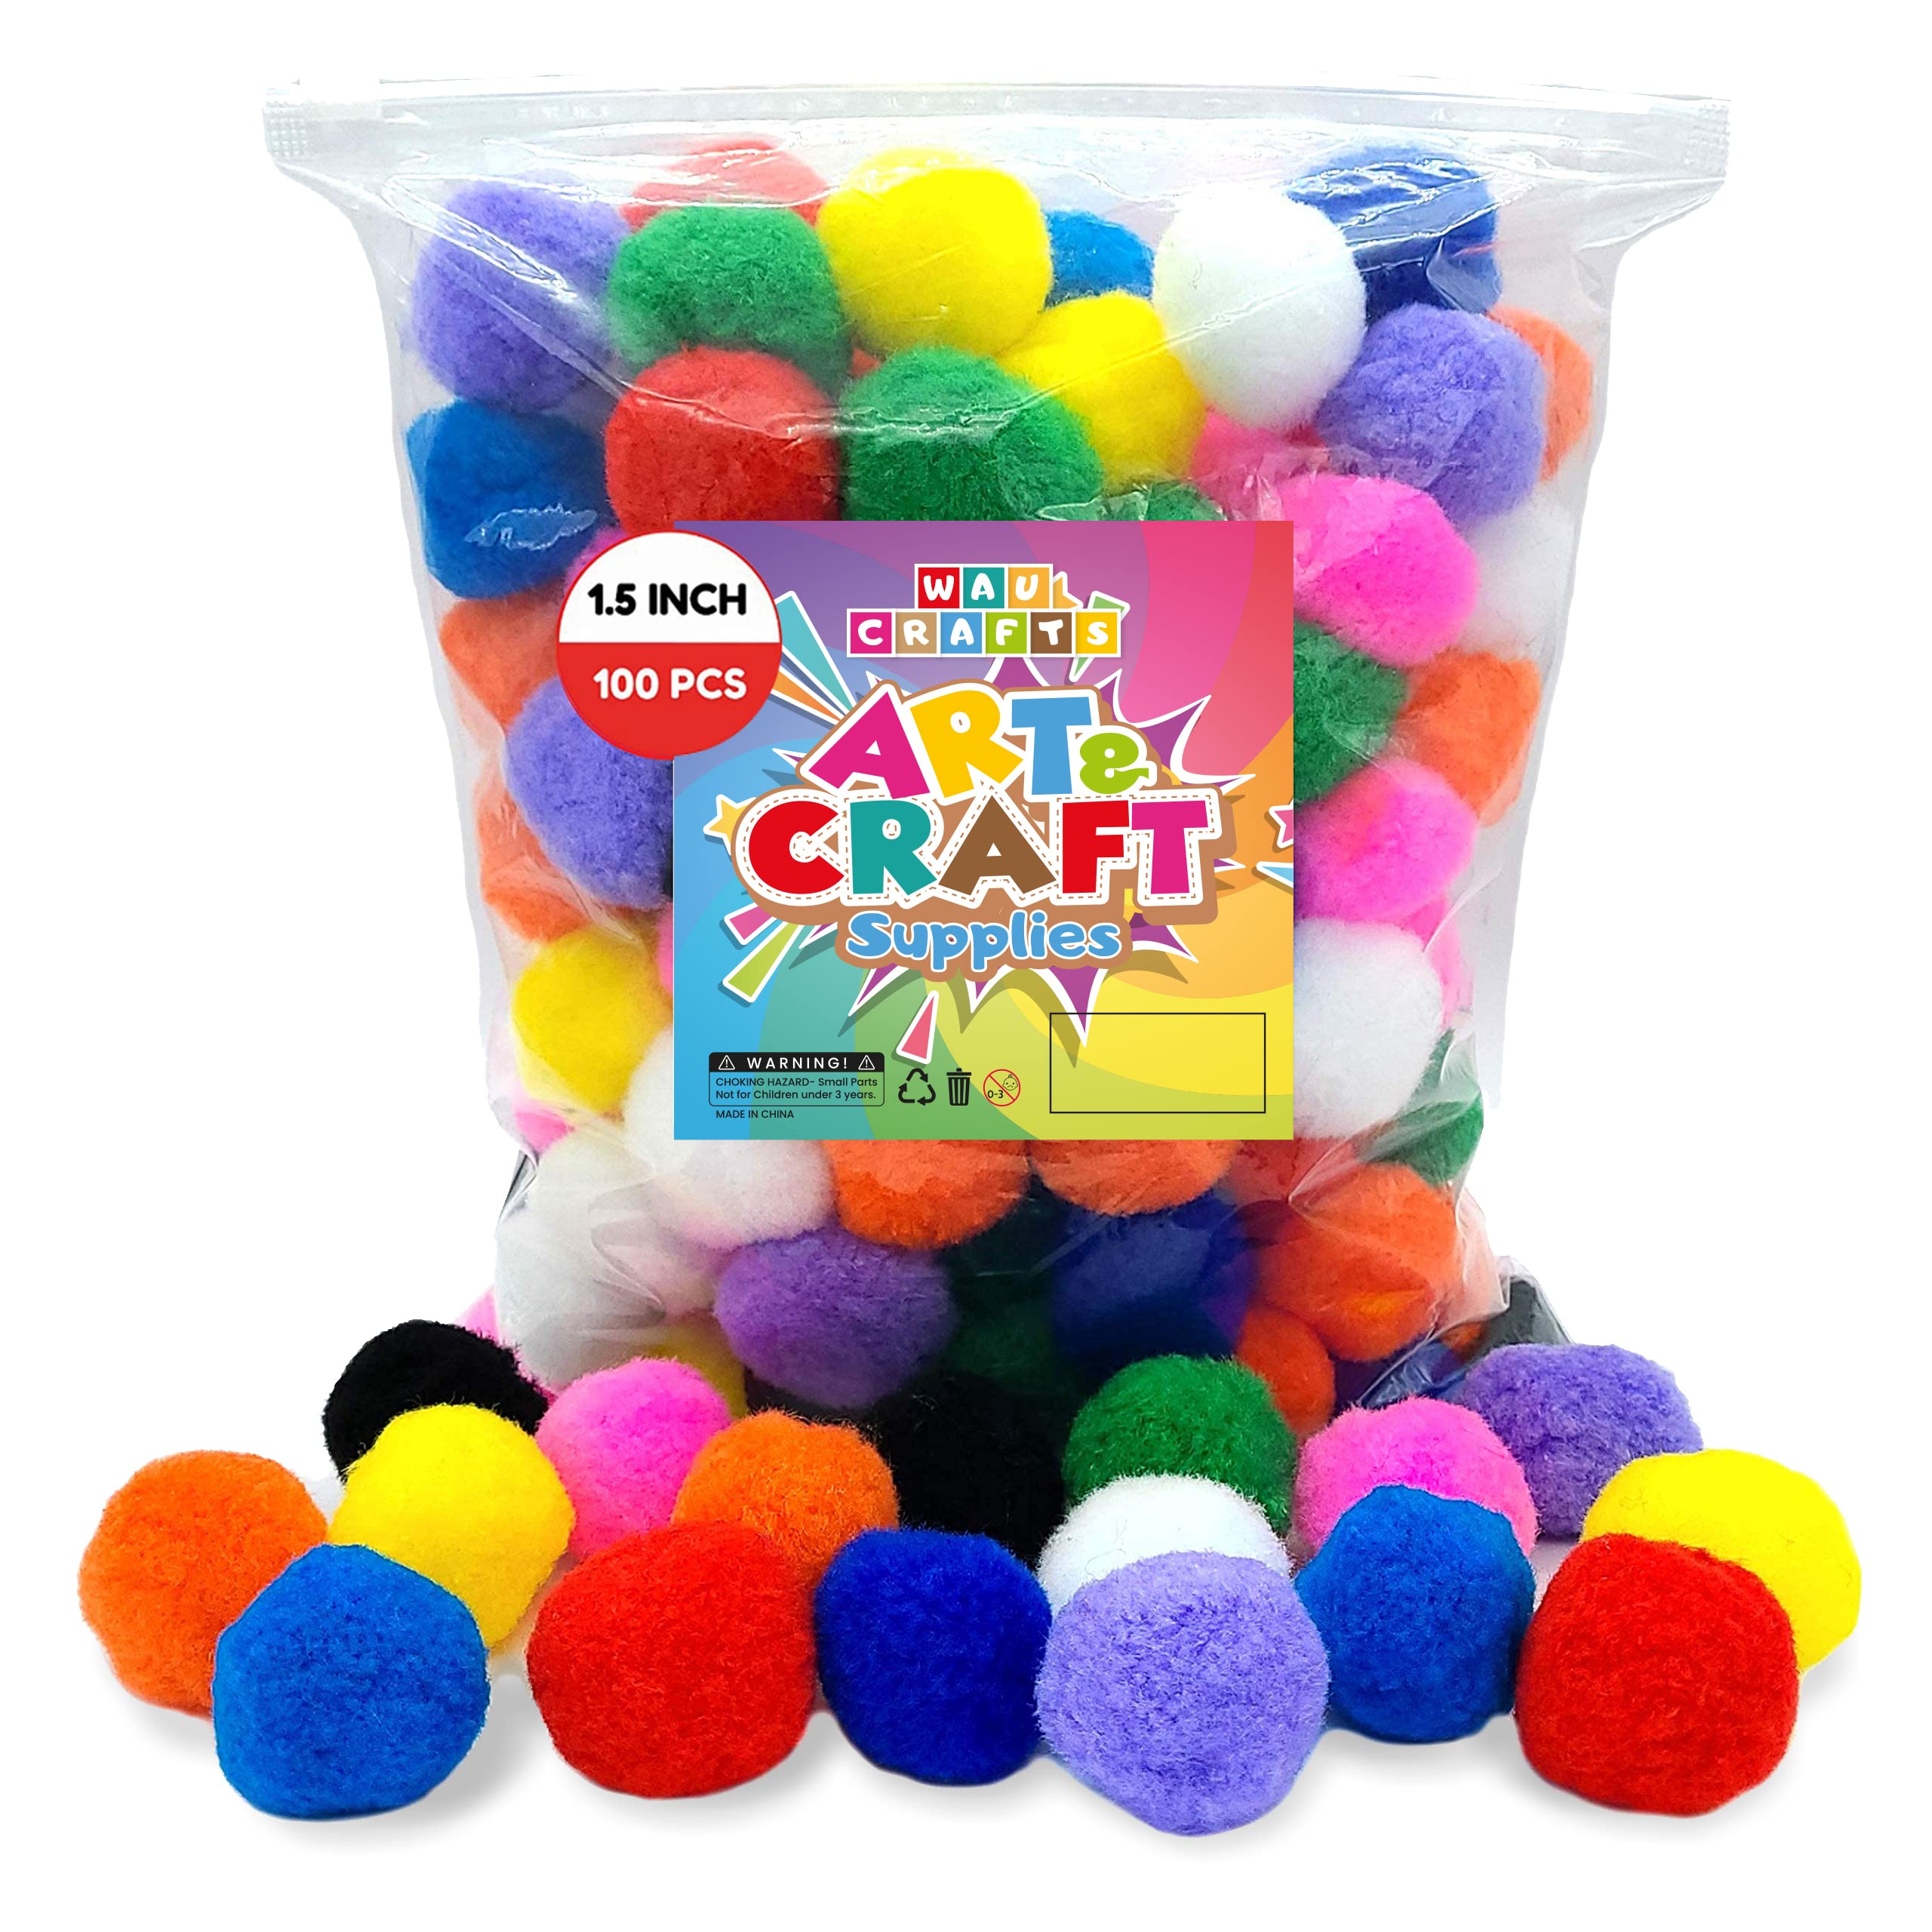 WAU Craft Pom Pom Balls - 100pcs 1.5 inch Multicolored Large Pompoms for  Crafts Art DIY Project